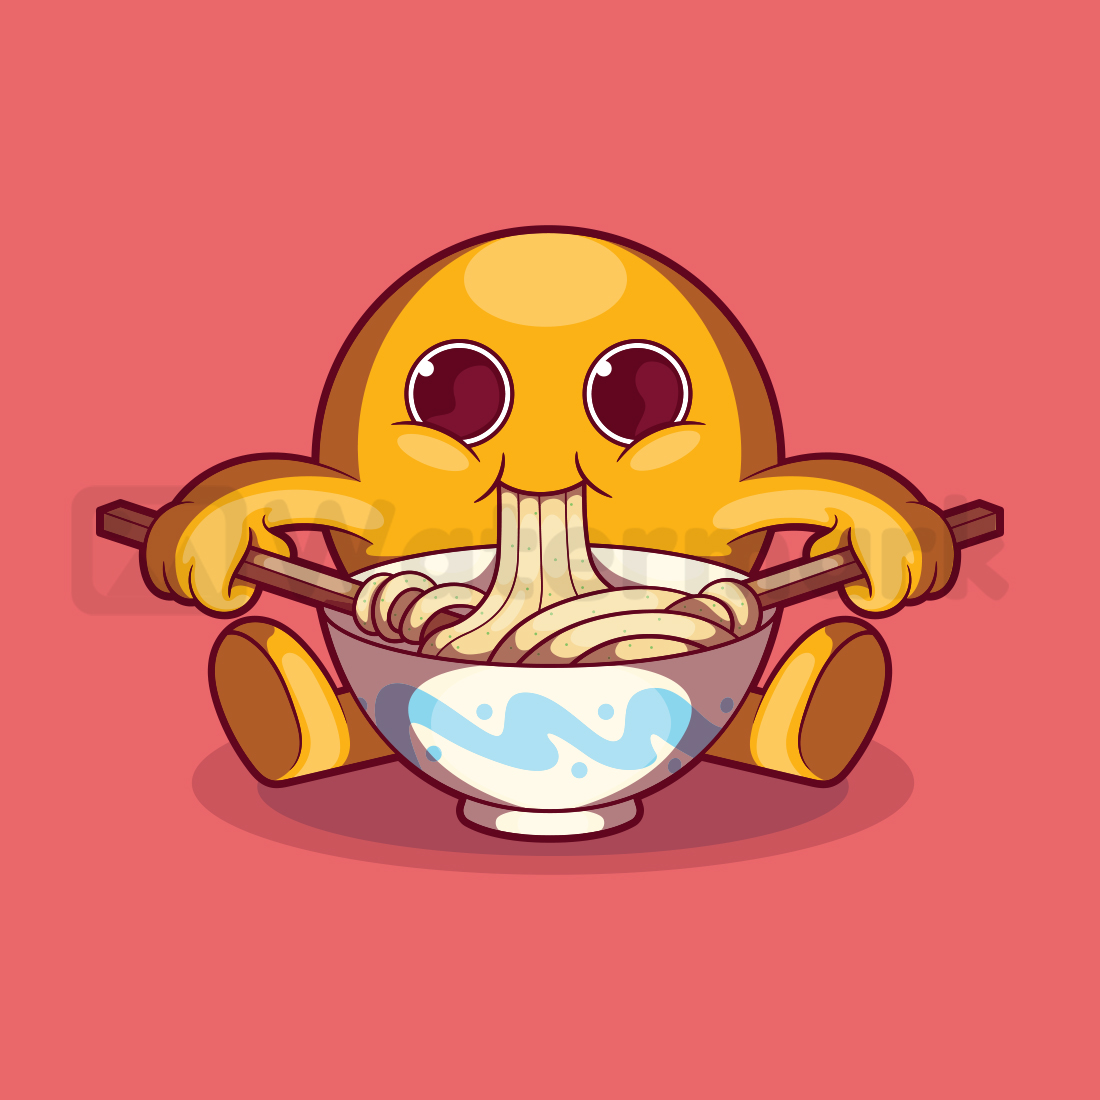 Emoji Eating! cover image.